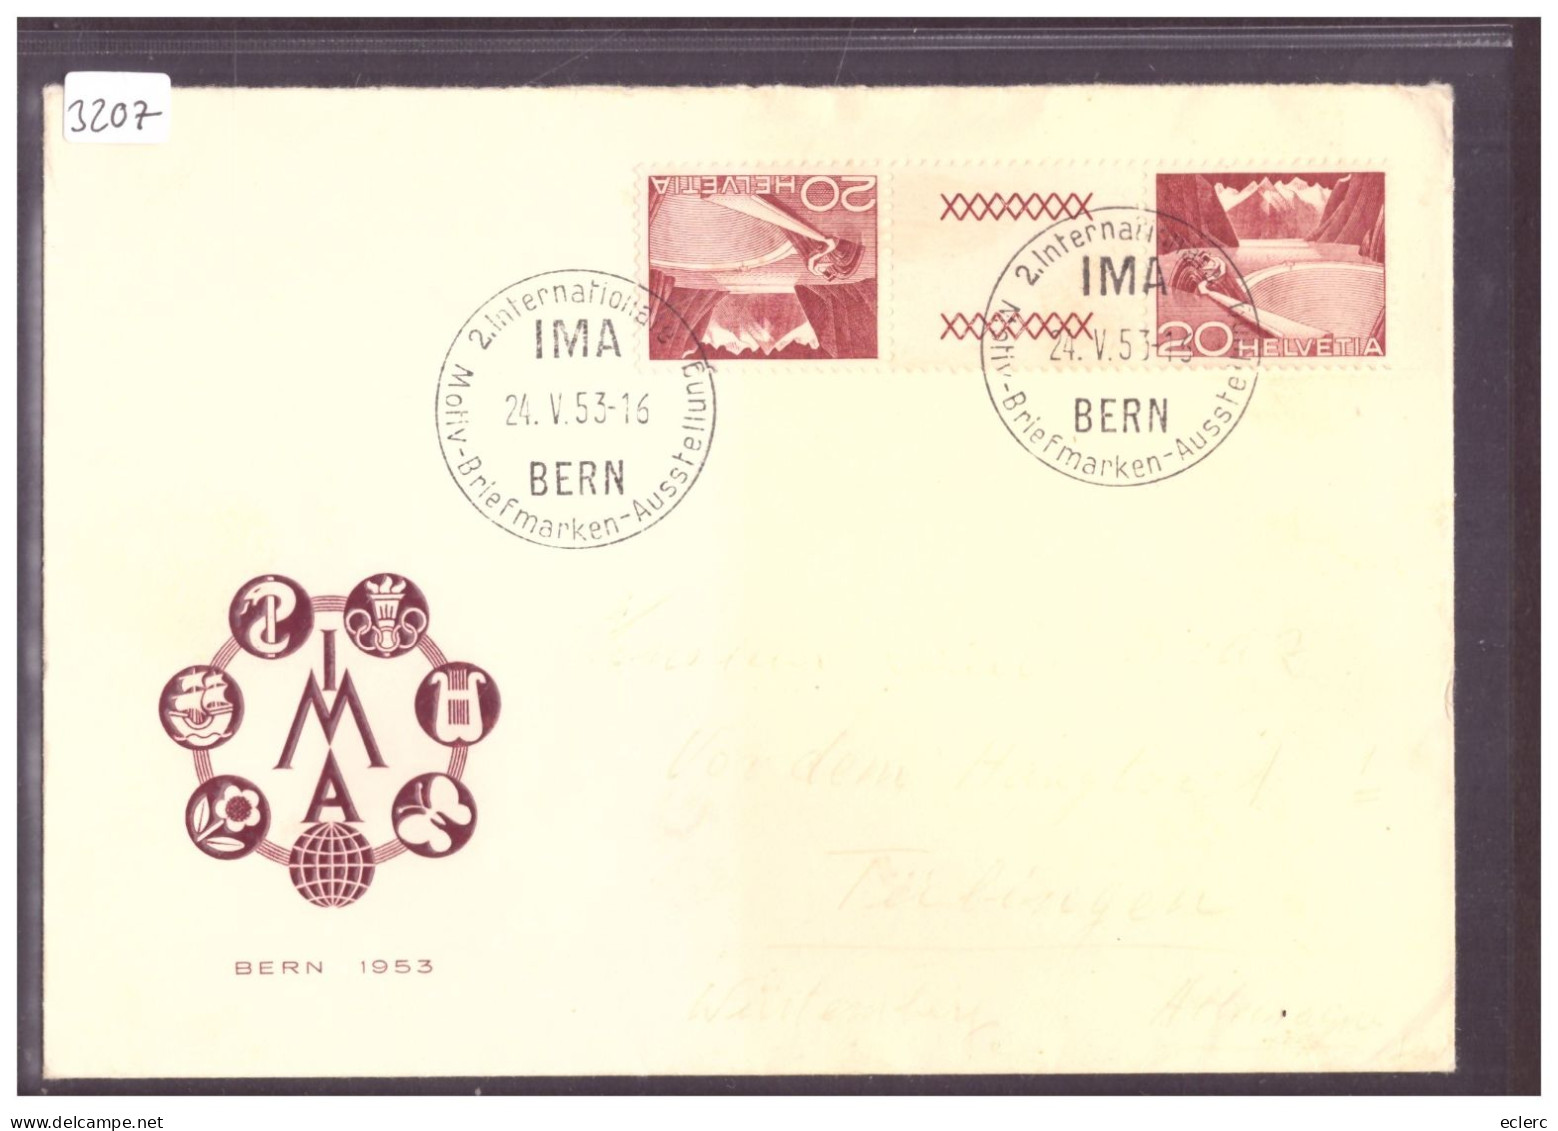 IMA BERN 1953 - MOTIV BRIEFMARKEN AUSSTELLUNG - Covers & Documents